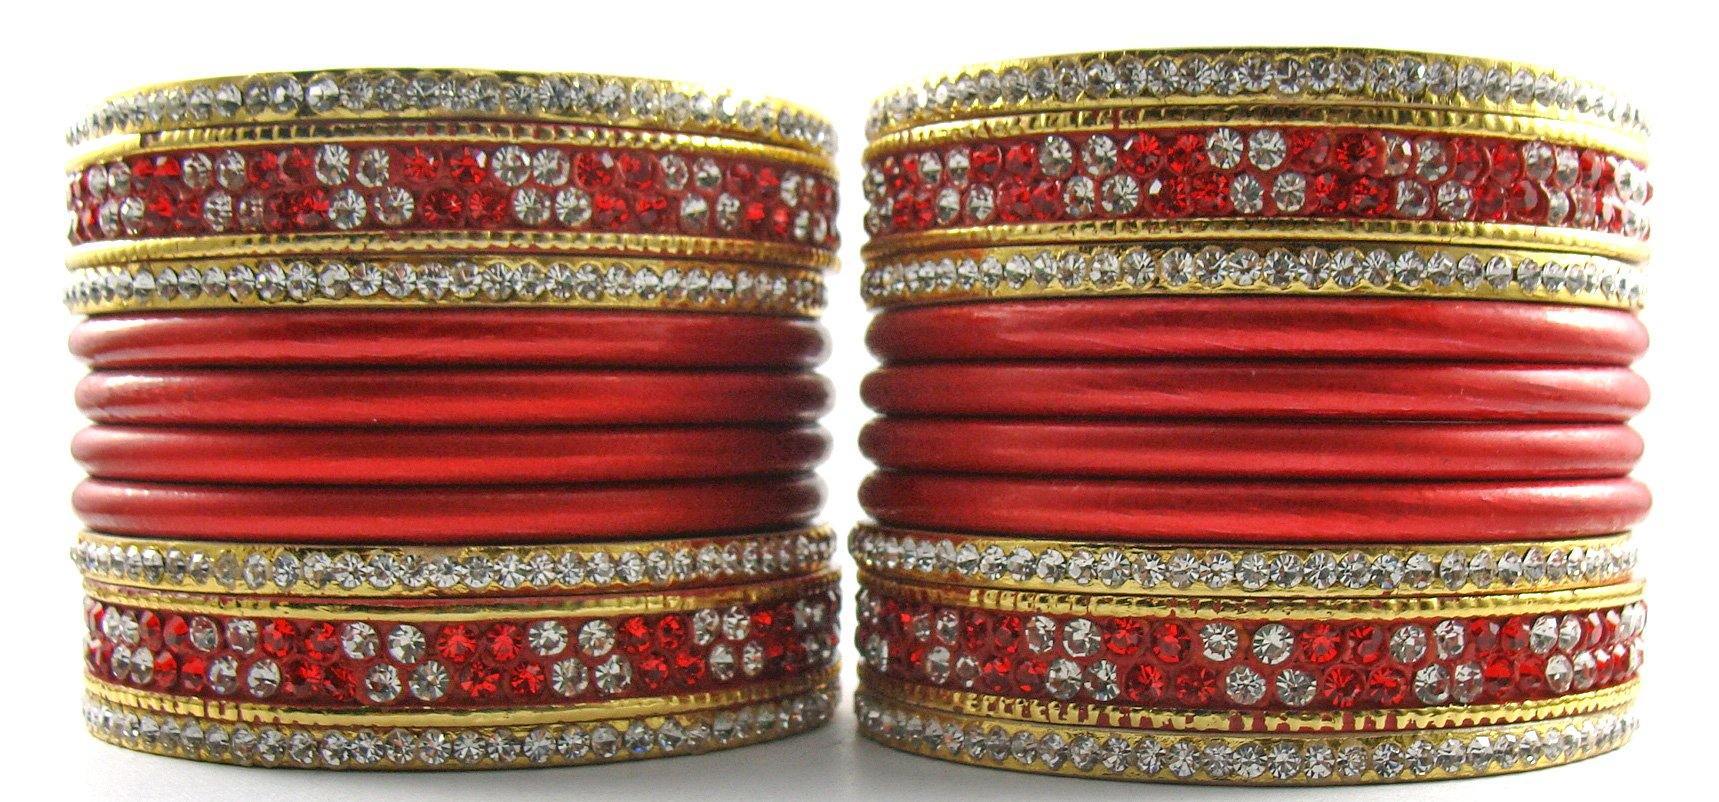 sukriti bridal red lac chura bangles for women -set of 20